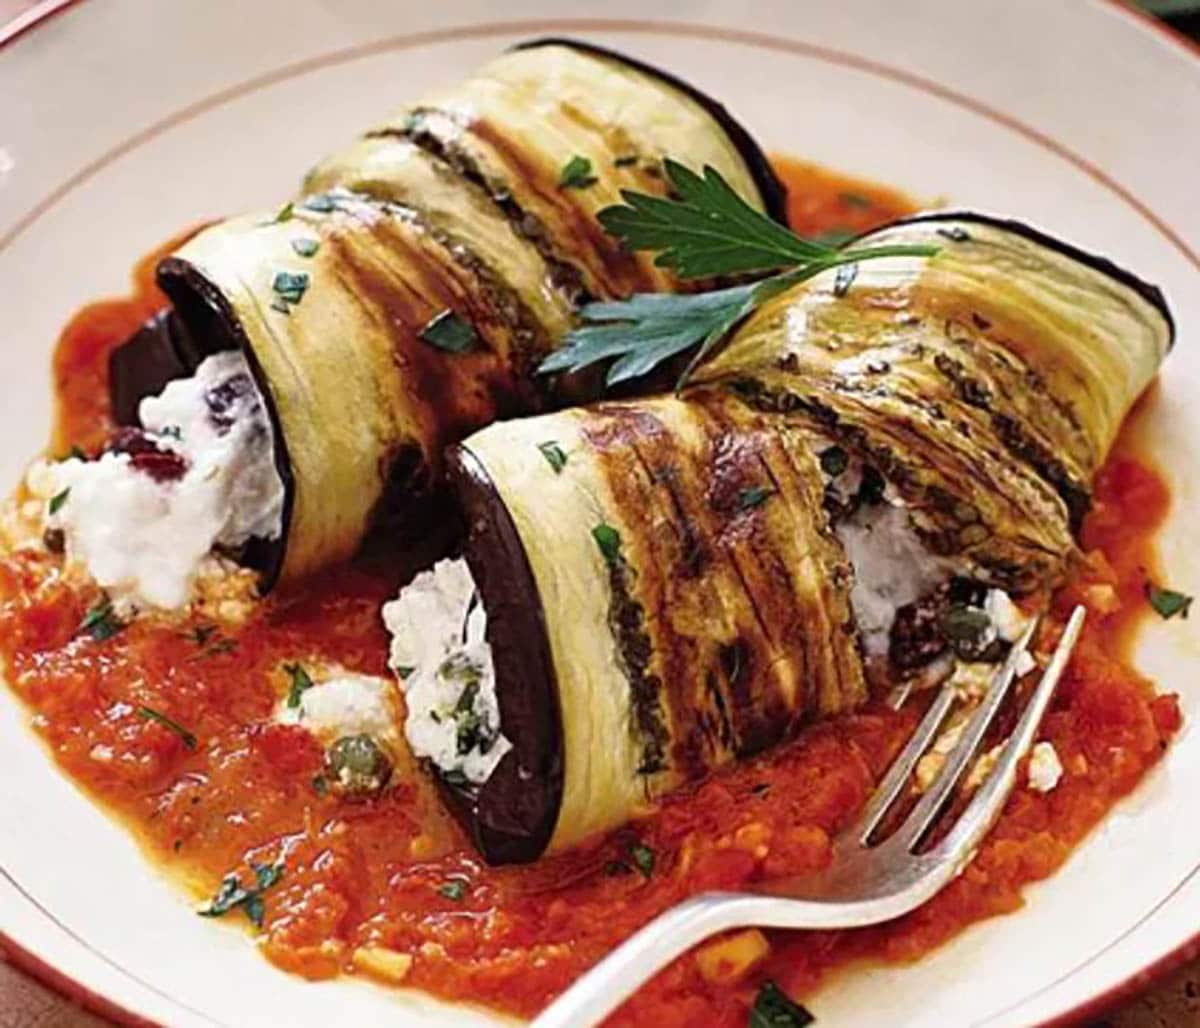 Eggplant Cannelloni